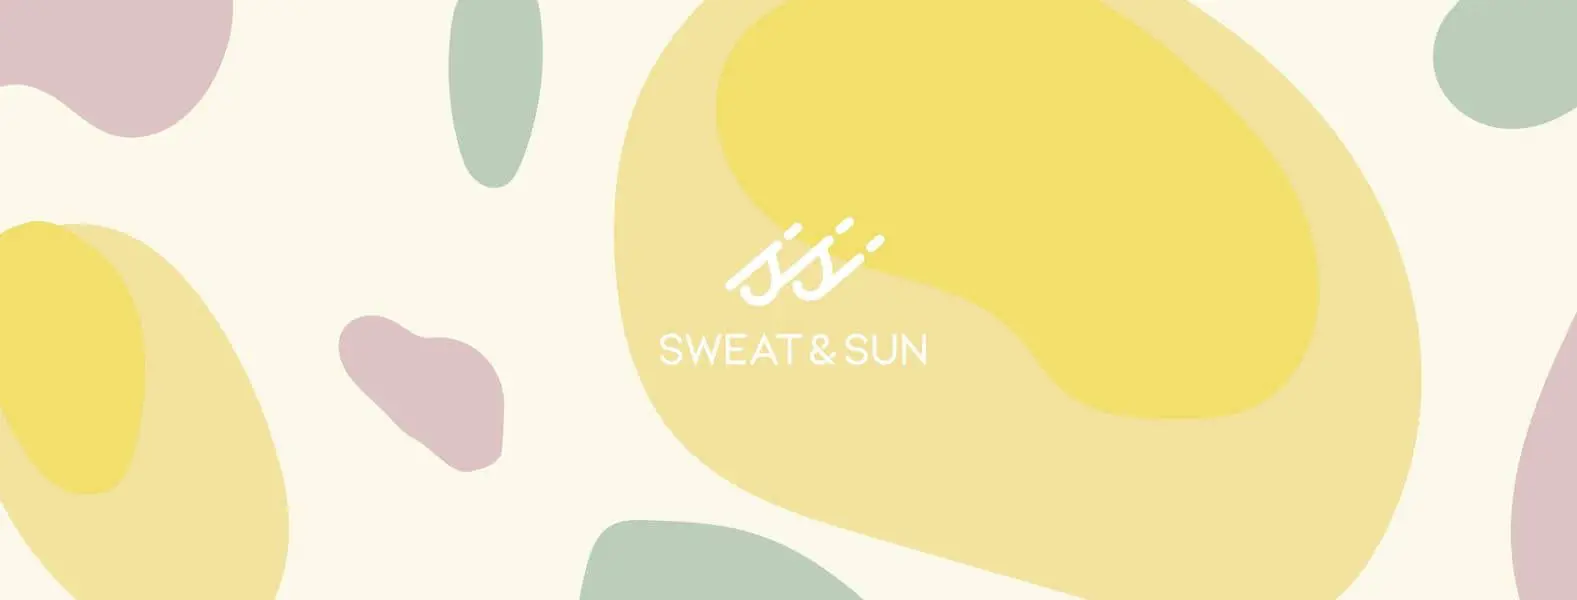 Sweat & Sun • 6043685bd12be bp cover image.jpg